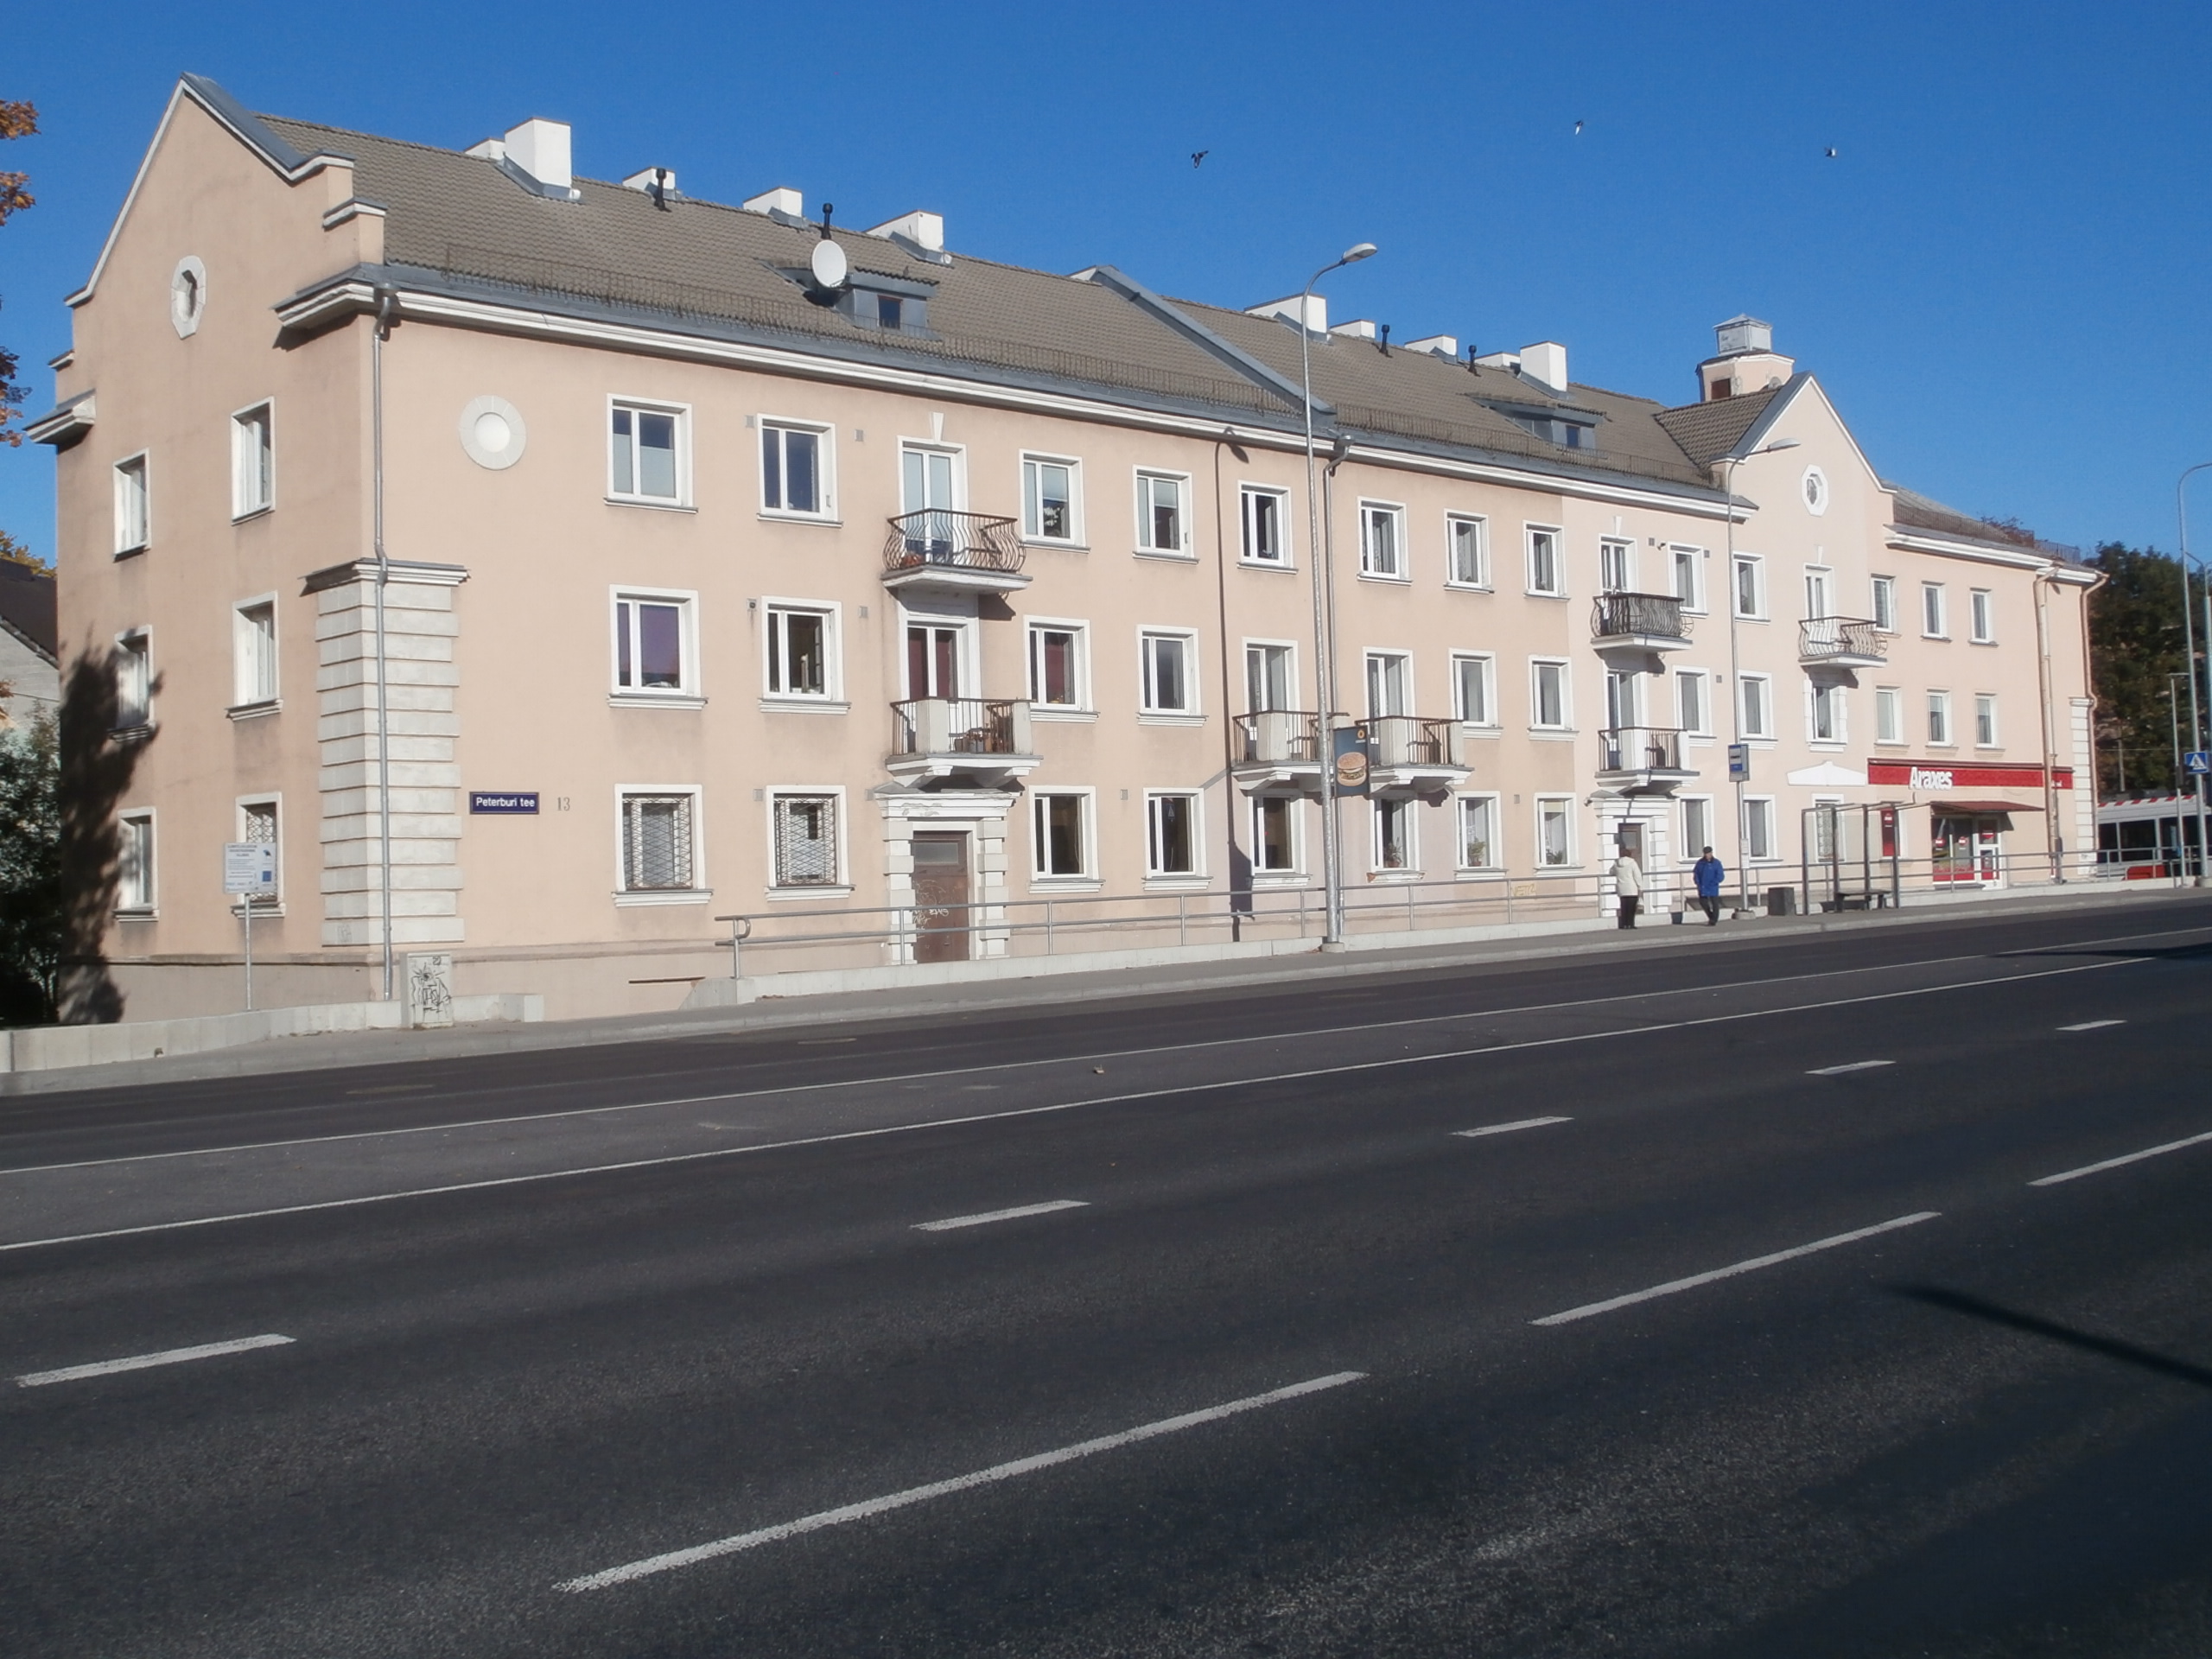 Peterburi tee 13 Building in Lasnamae Tallinn 20 October 2015